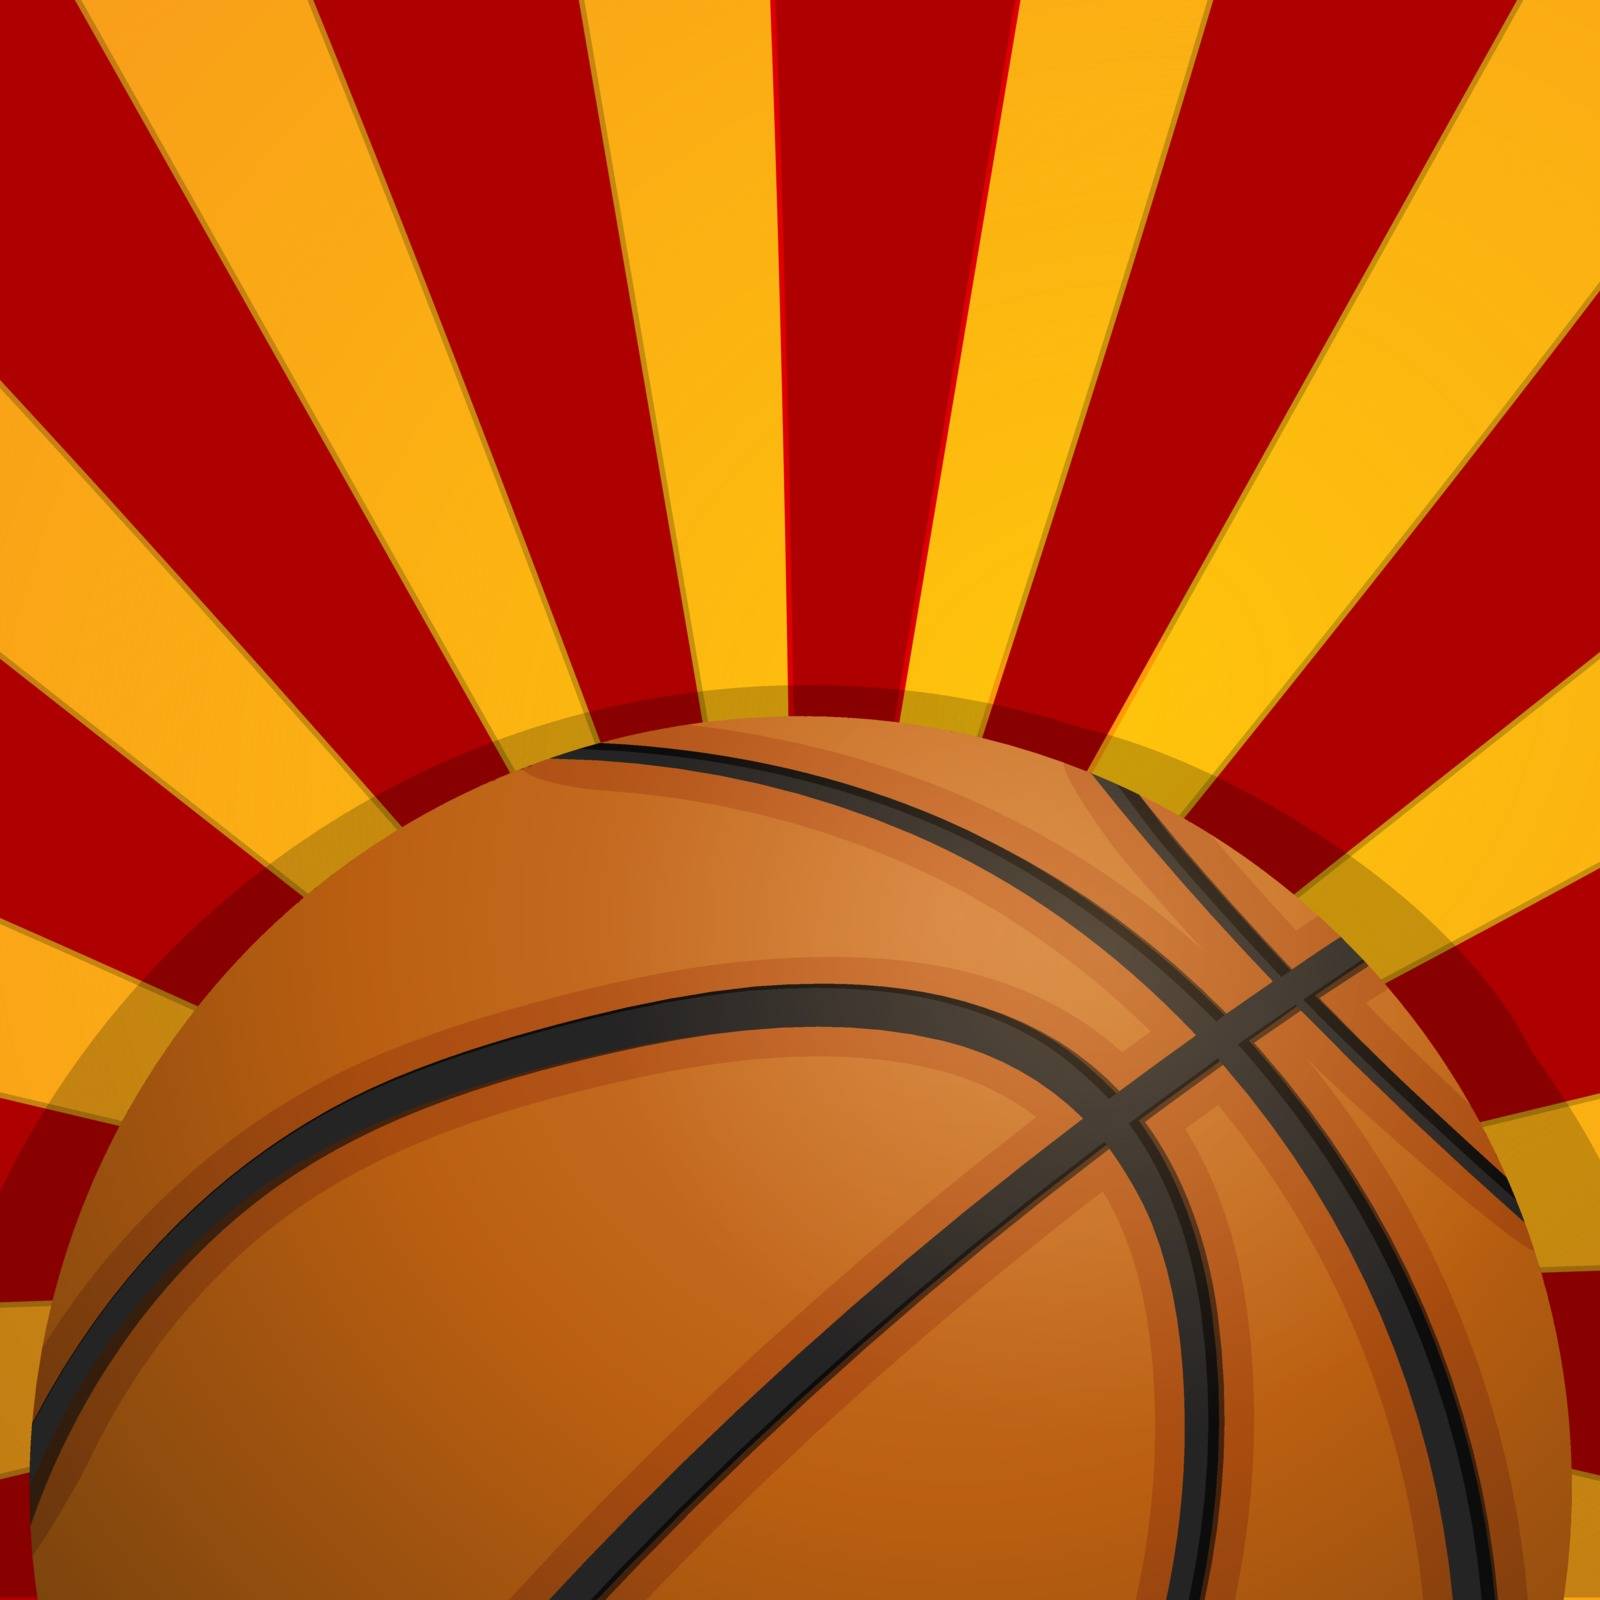 Basketball icon design, sports background